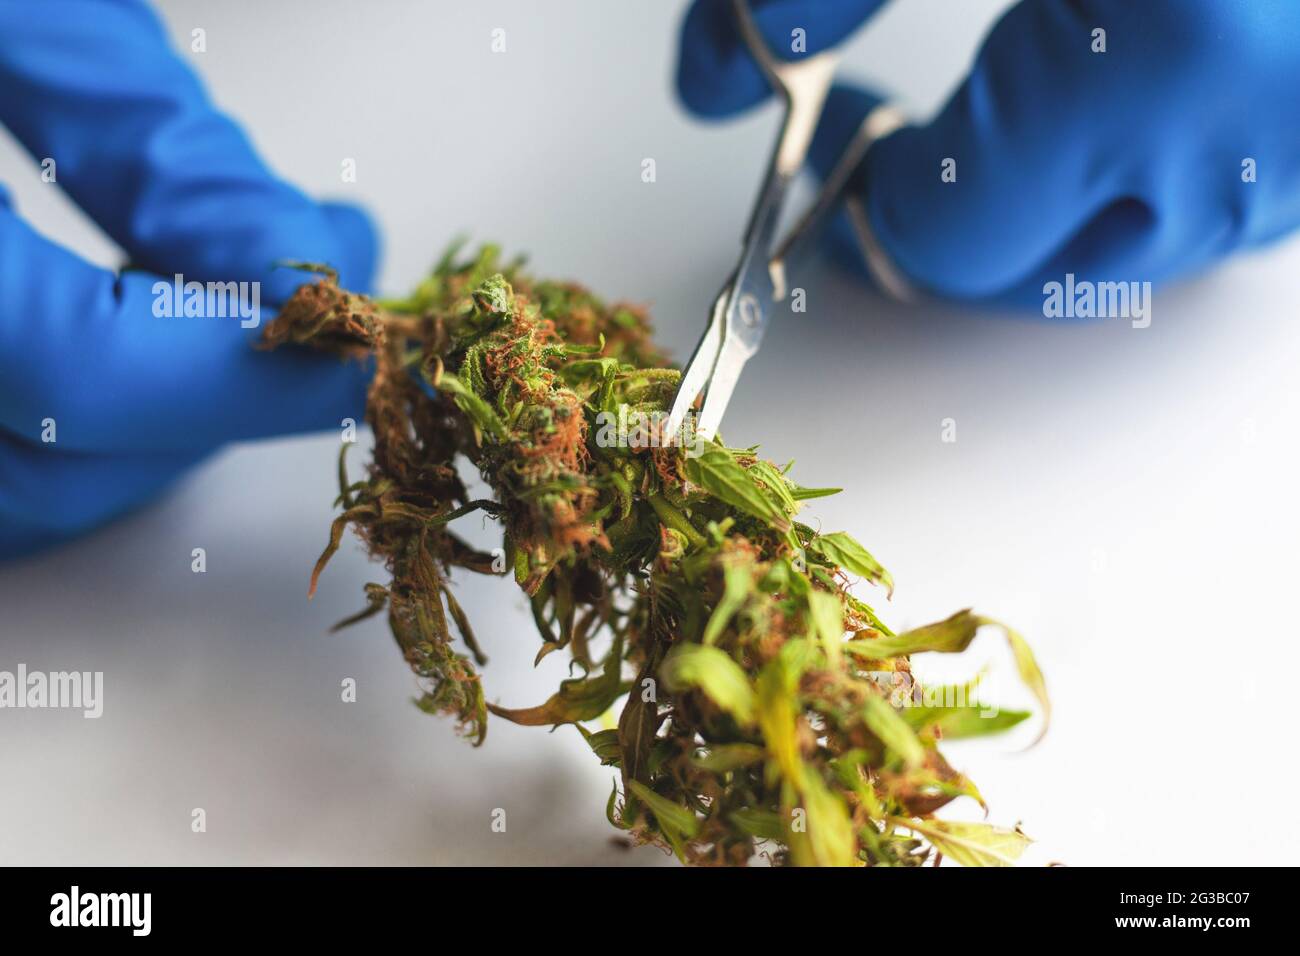 manicure cannabis bud, trimming marijuana leaves with scissors. Stock Photo